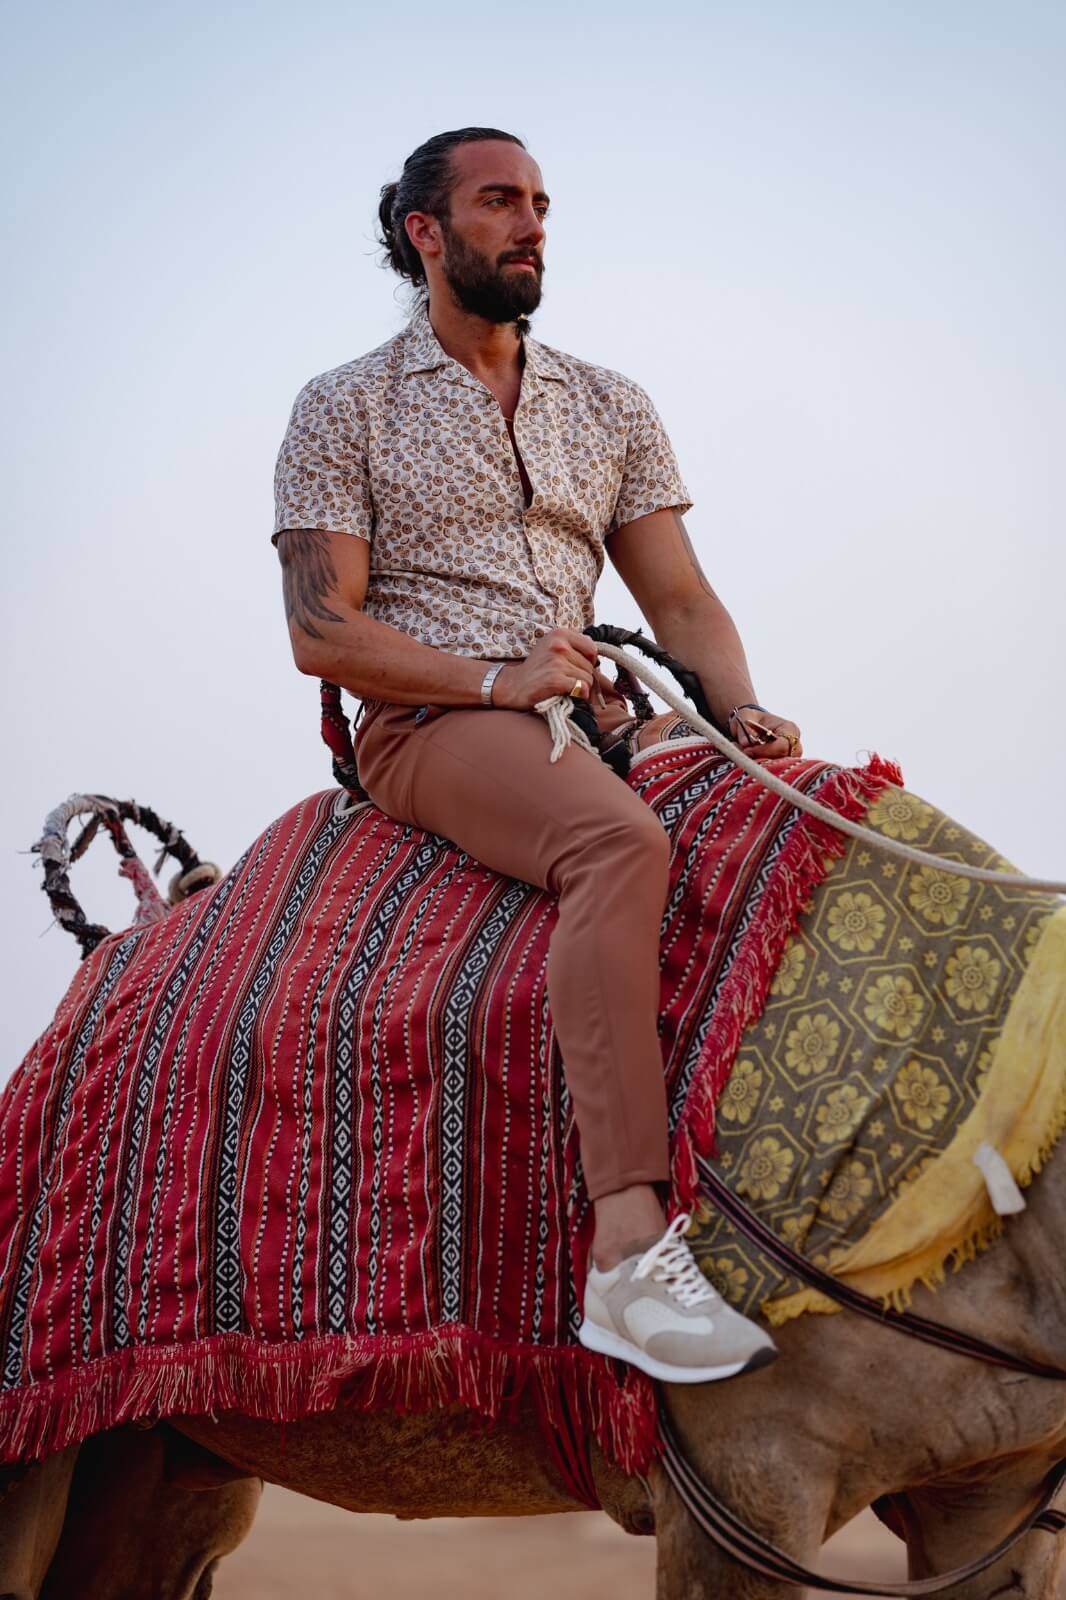 A Slim Fit Patterned Camel Shirt on display.